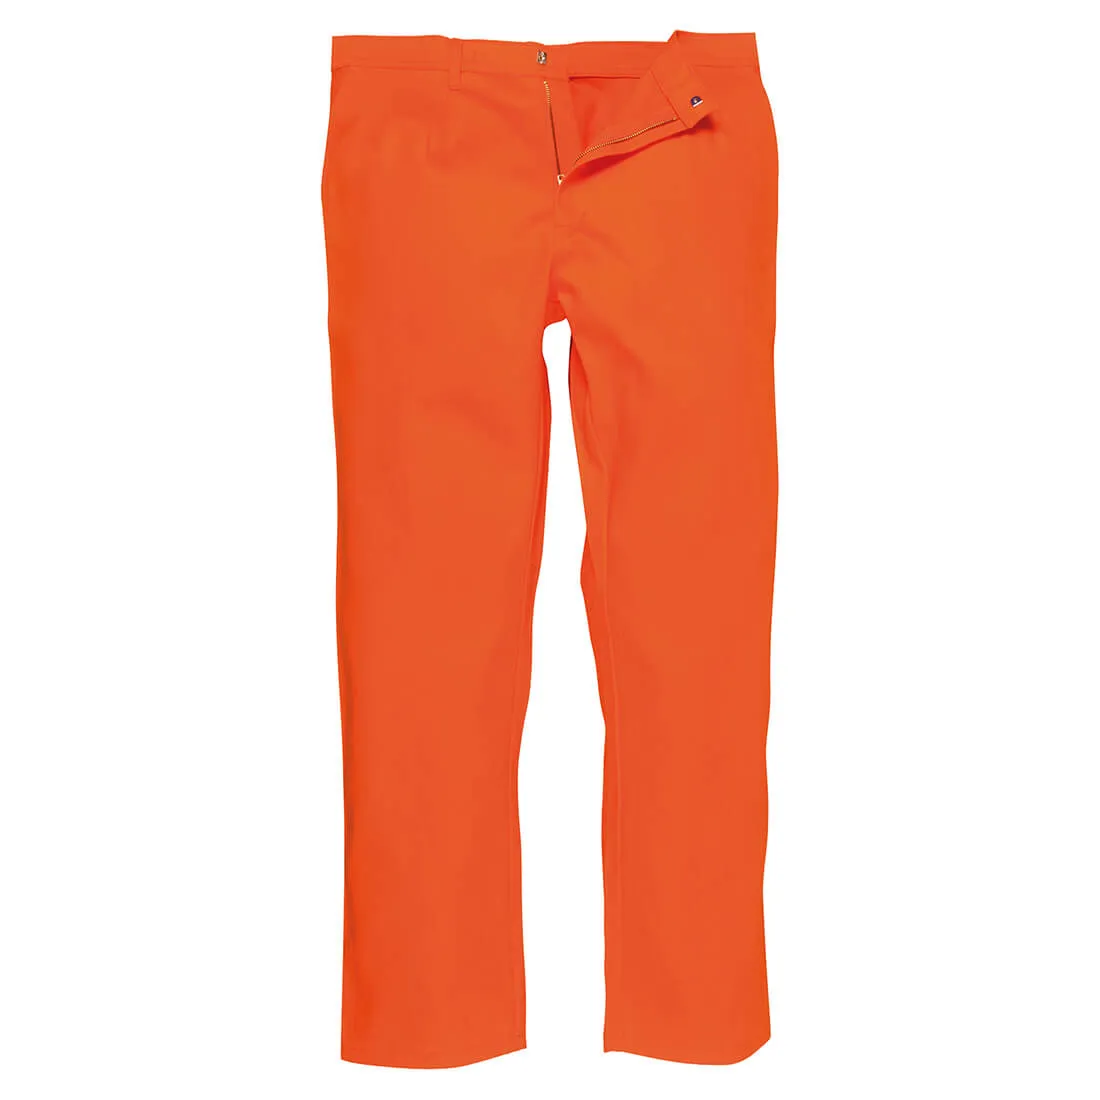 Biz Weld Mens Flame Resistant Trousers - Orange, Medium, 32"